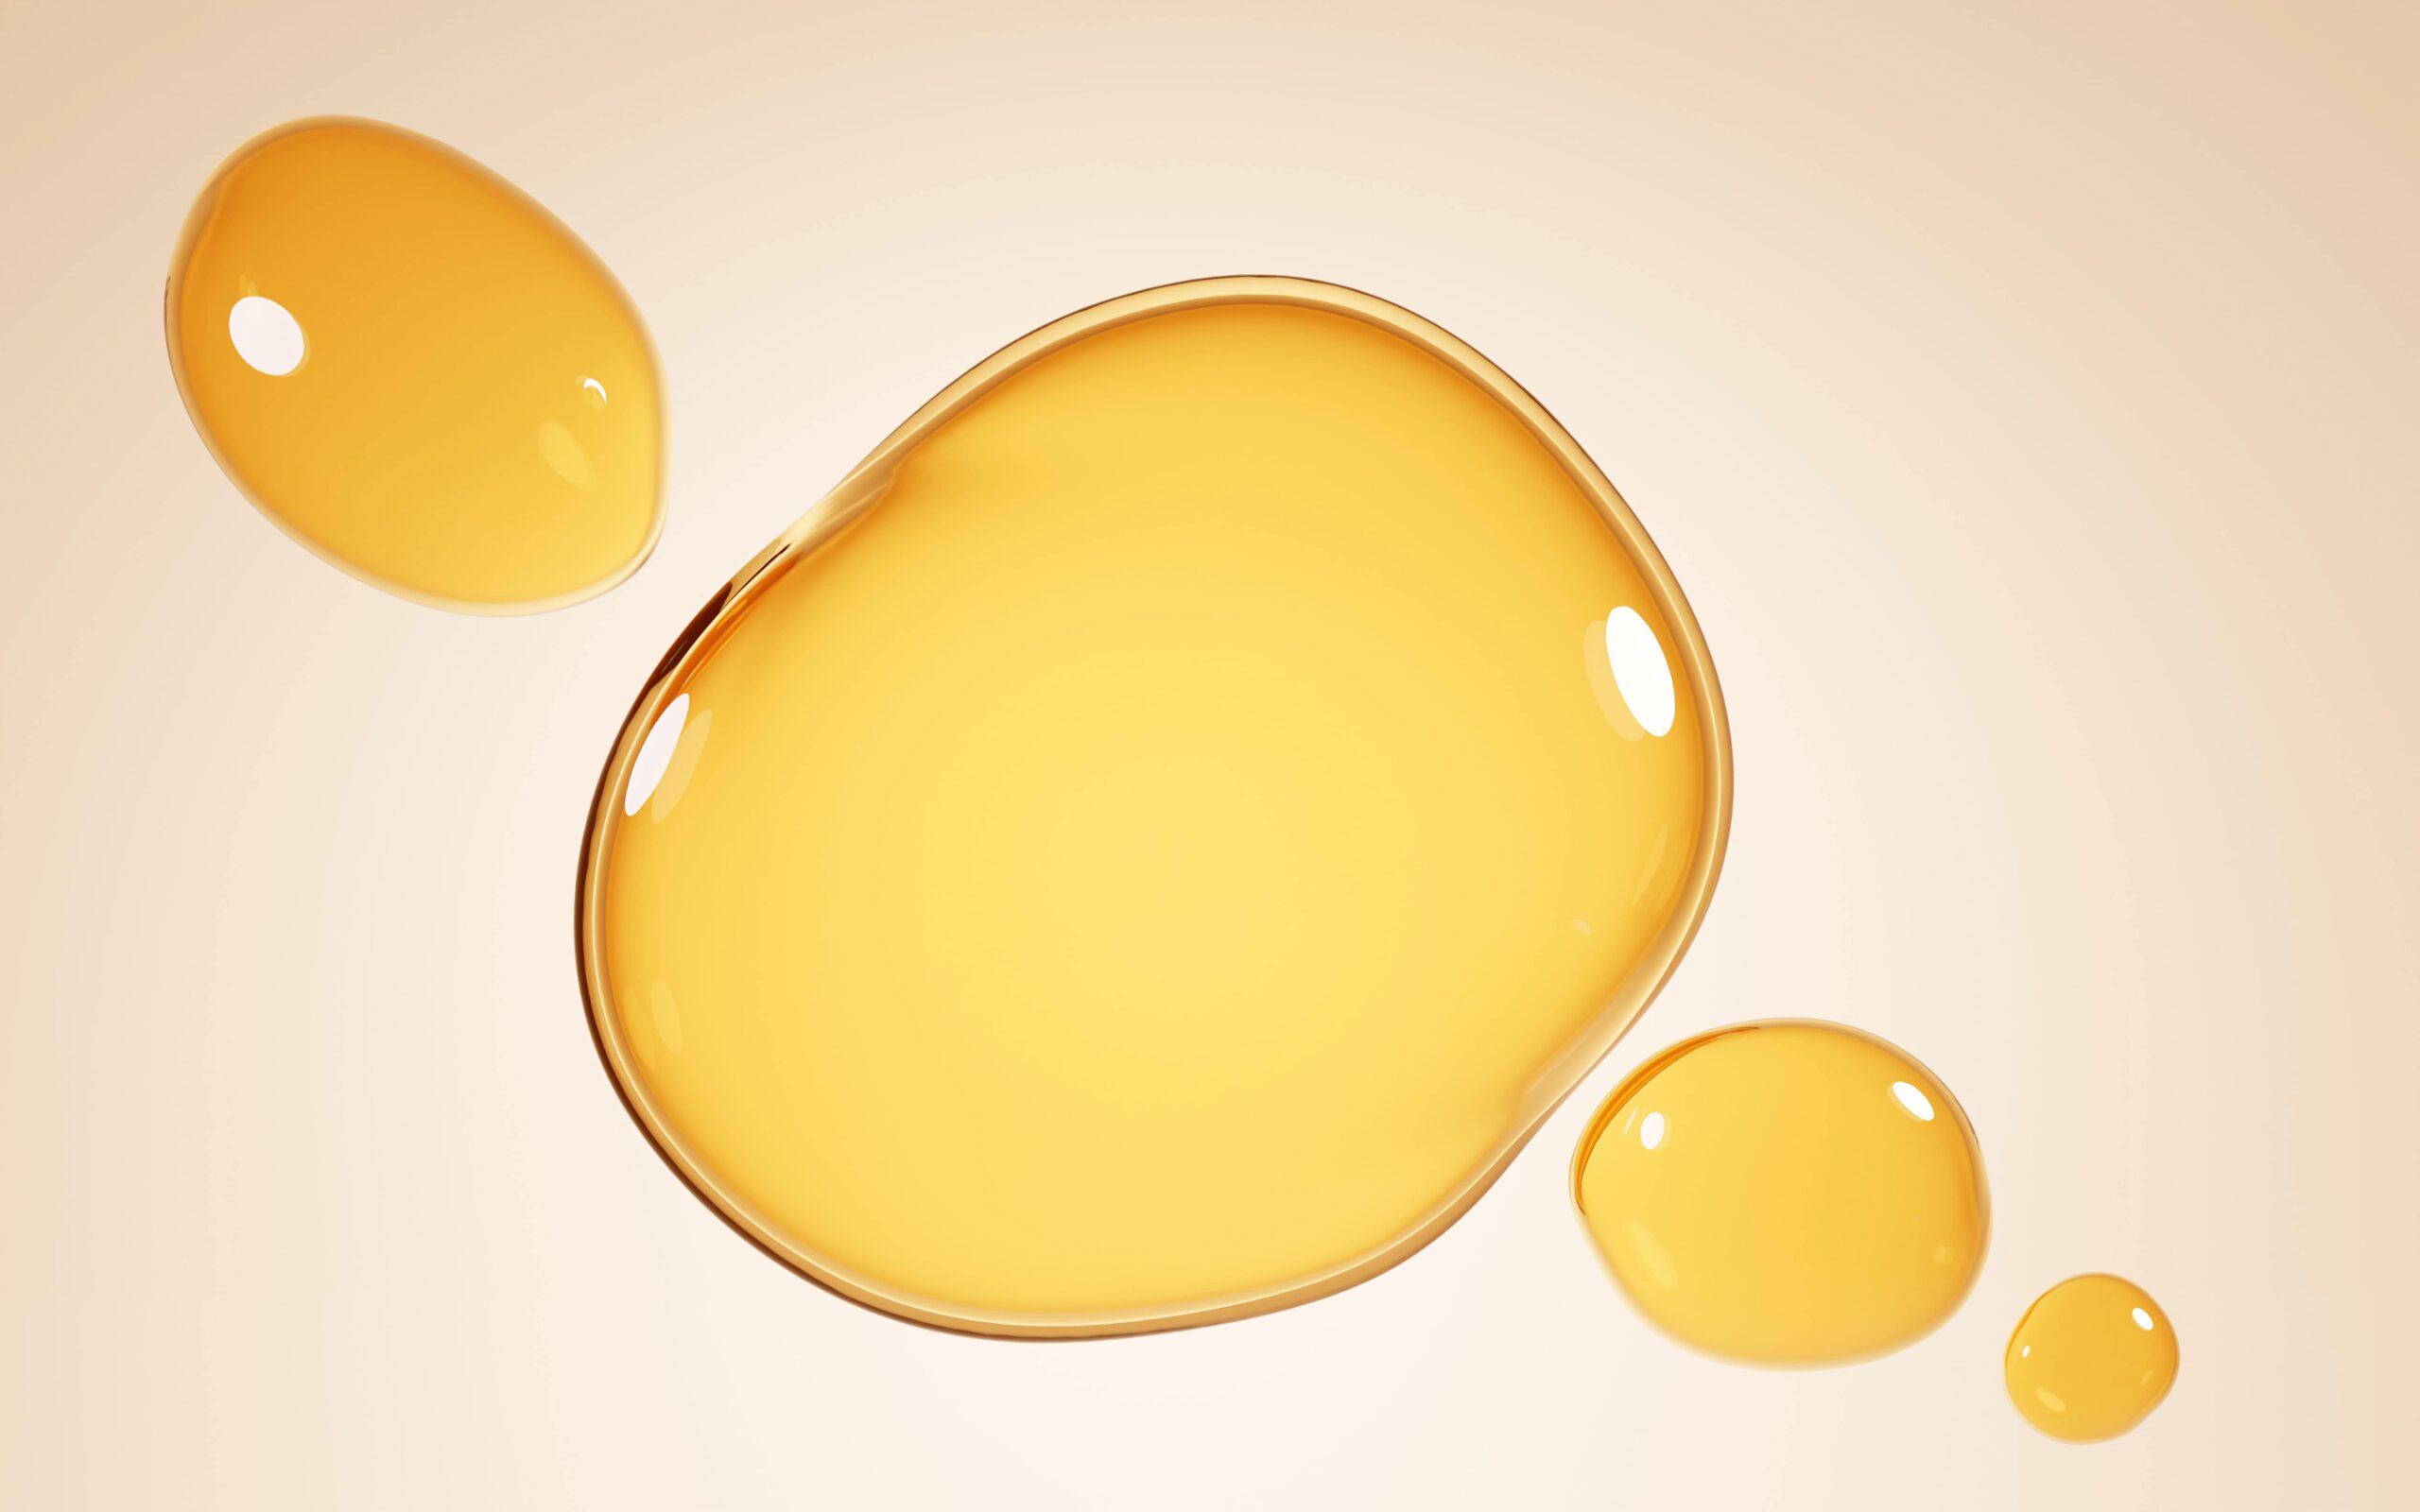 A Beginner’s Guide To CBD Oil Drops